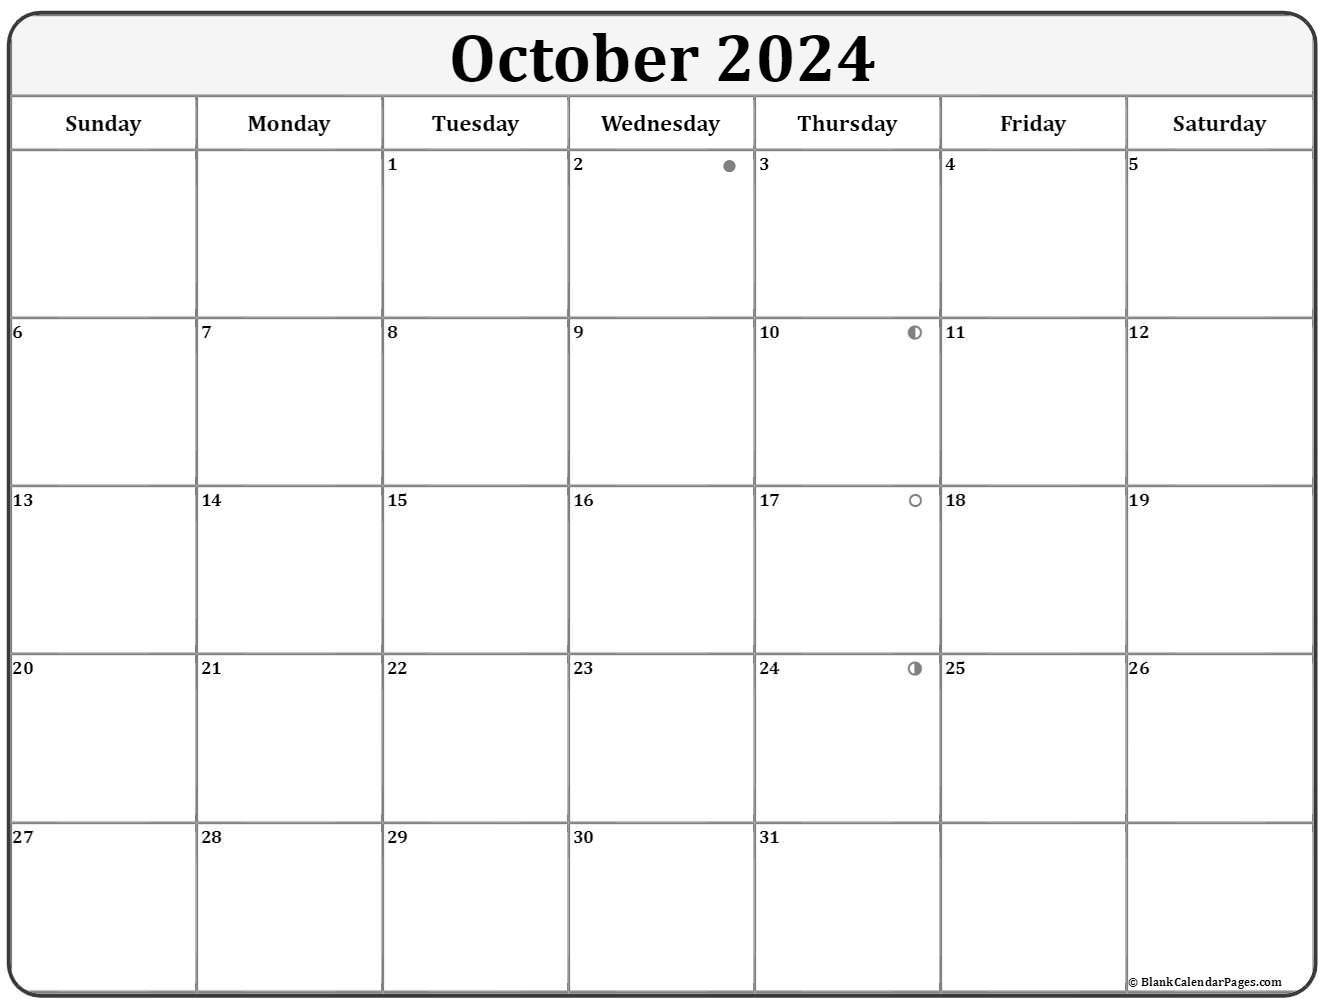 October 2024 Lunar Calendar | Moon Phase Calendar